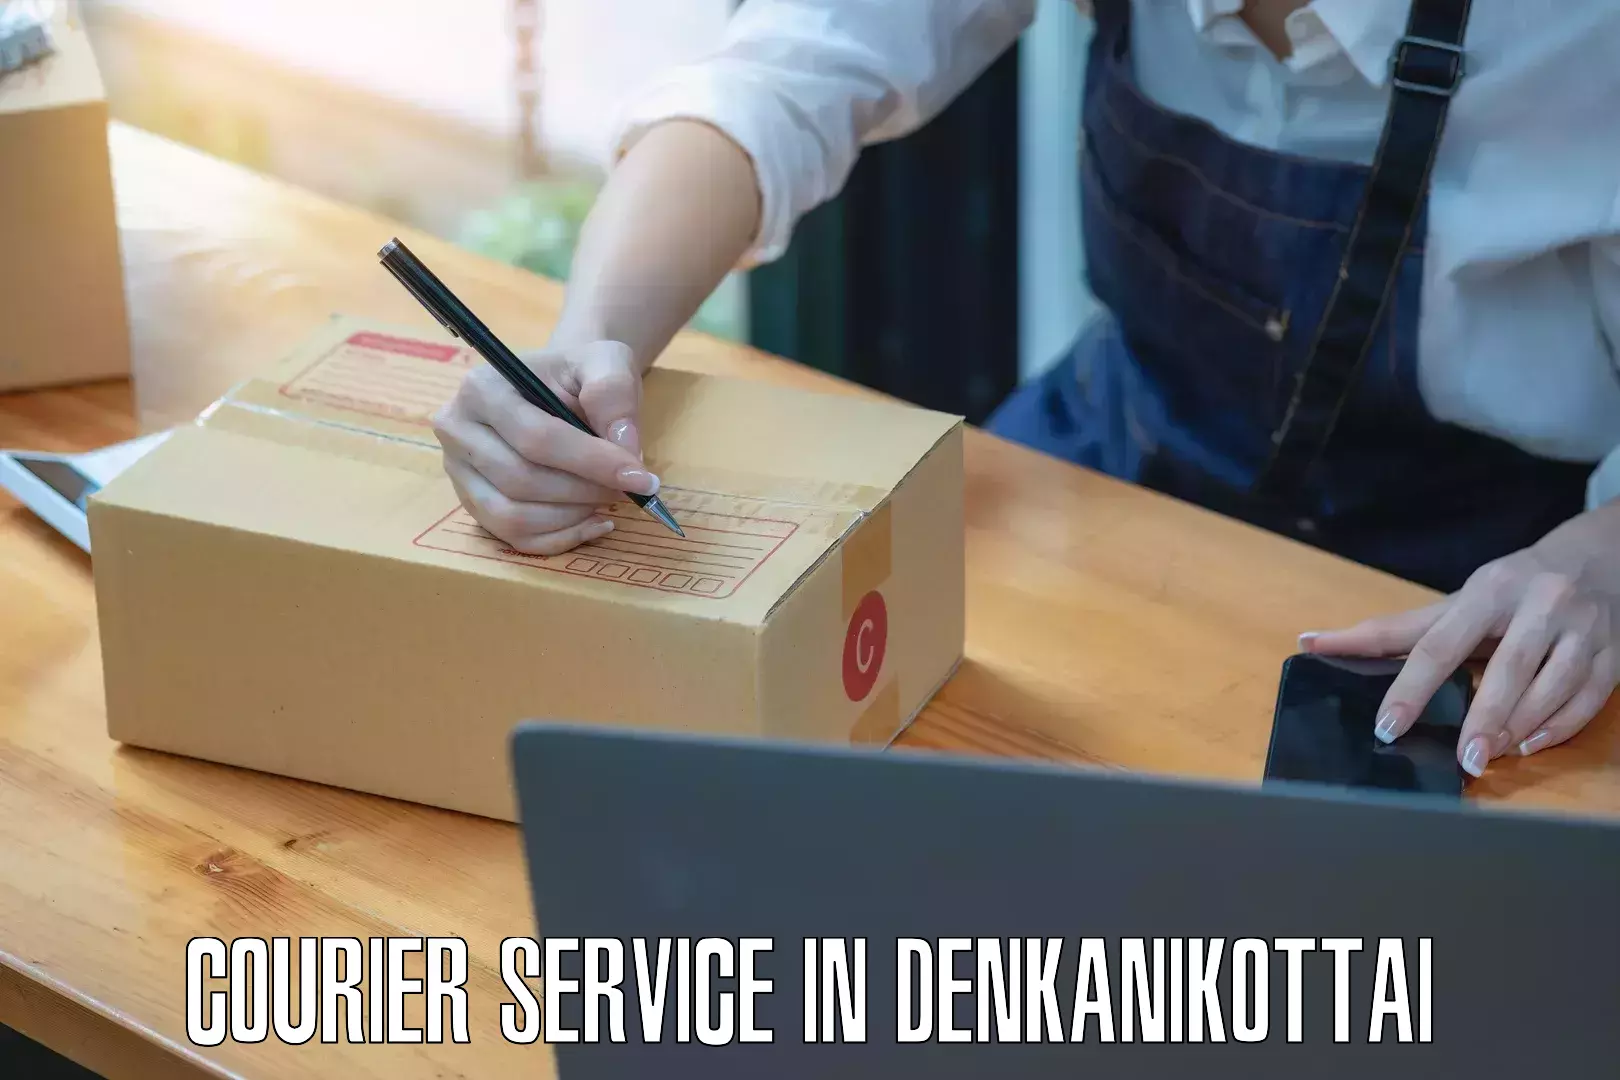 Enhanced shipping experience in Denkanikottai